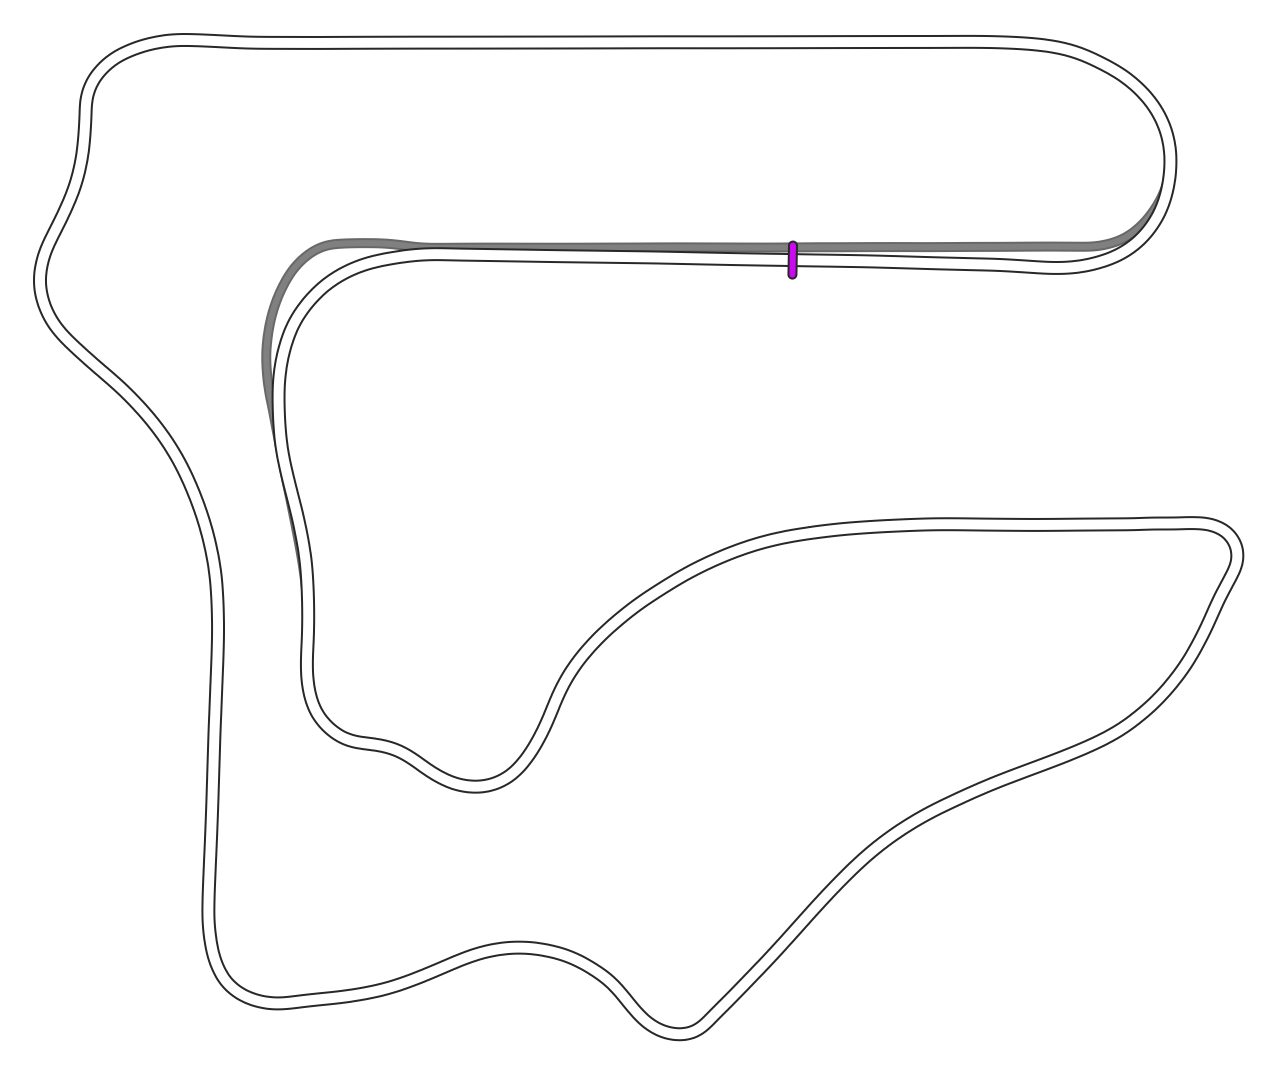 Sebring International Raceway (Trackday)